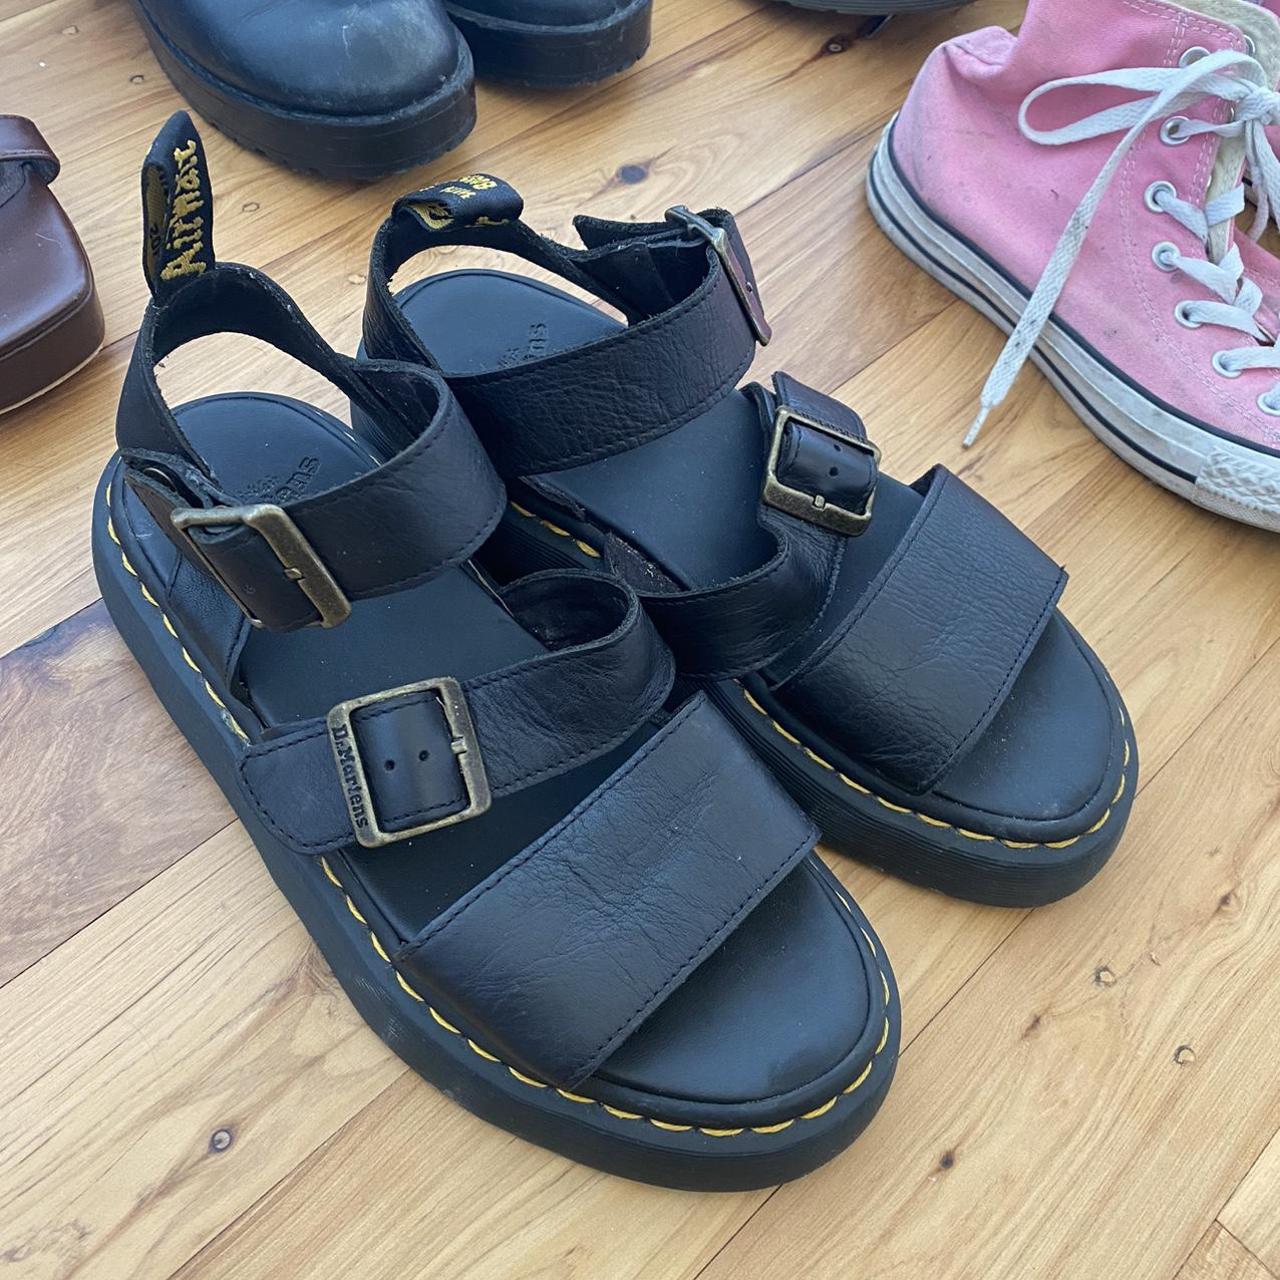 Dr marten gryphon quad sandals black size 8 - Depop